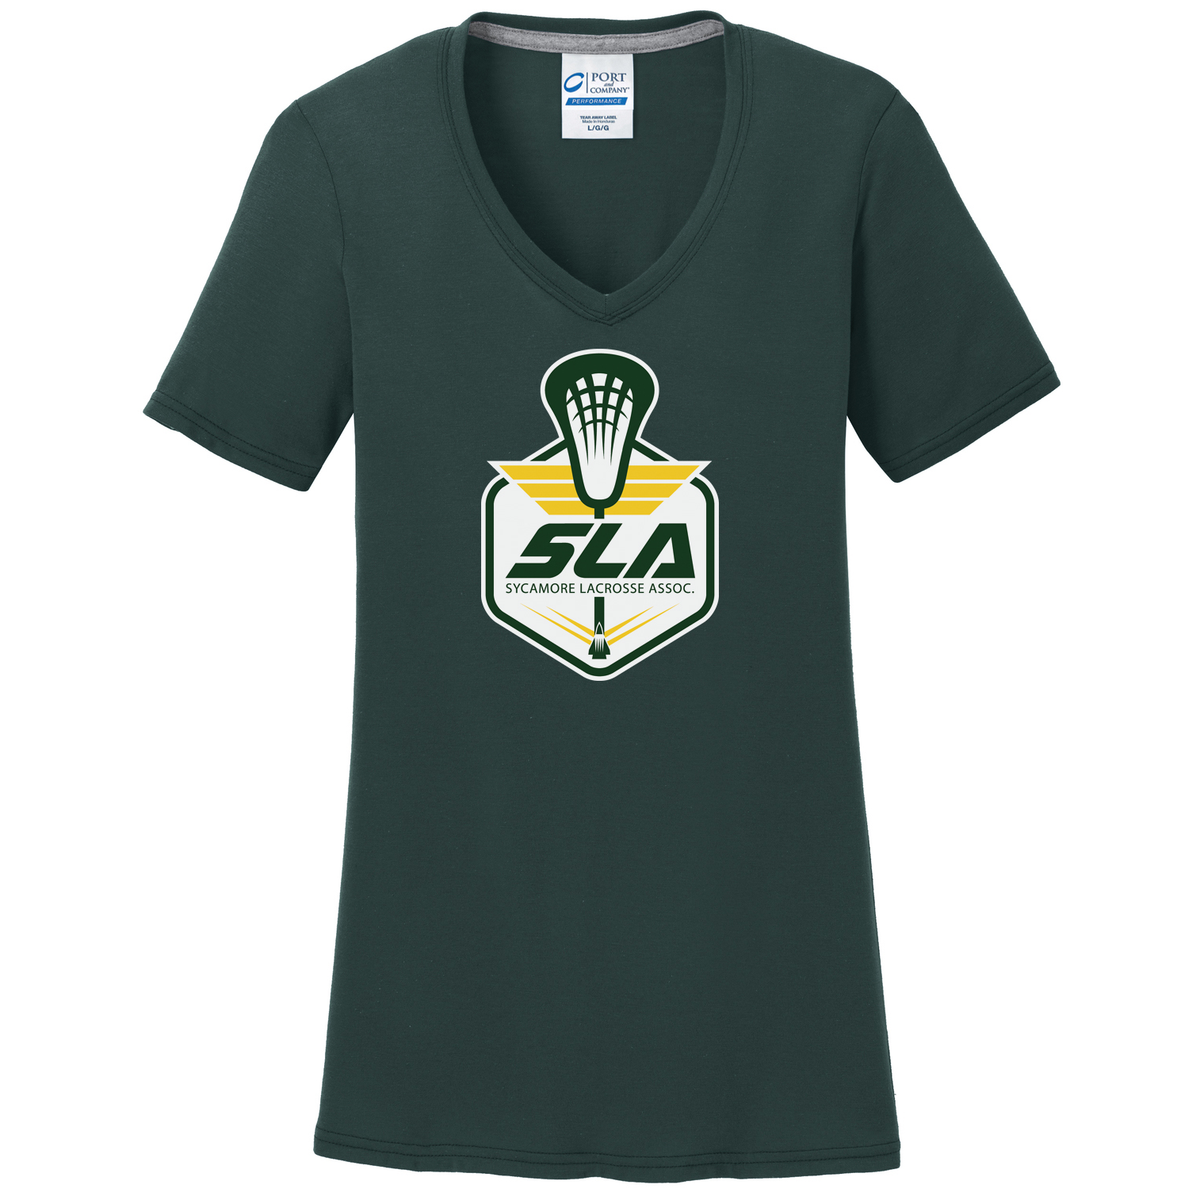 Sycamore Lacrosse Association Women's Dark Green T-Shirt